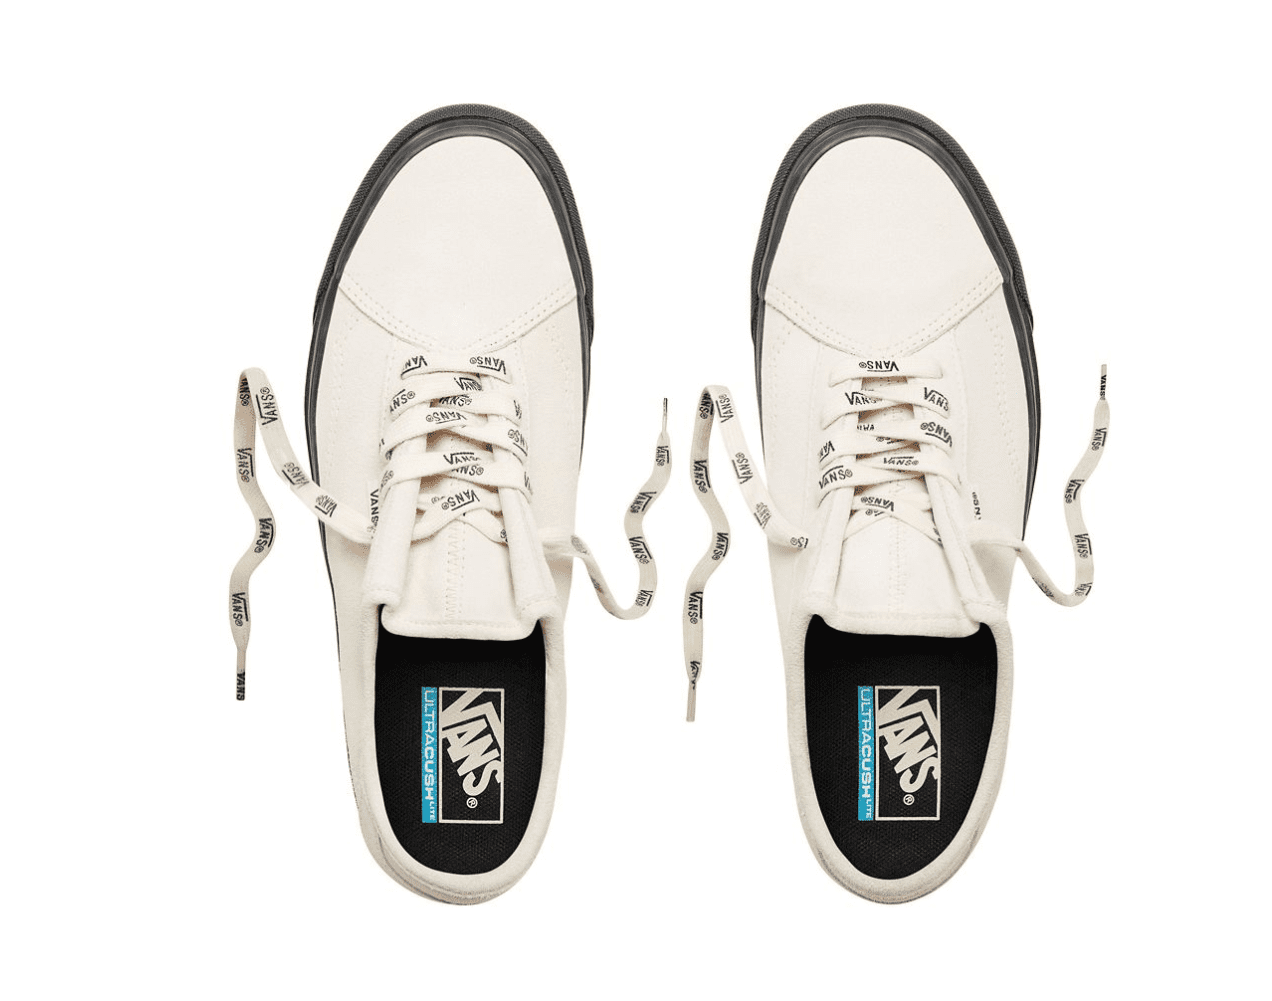 Vans - Vans Diamo Ni Call Out Marshmallow/Black Men's Classic Skate Shoes  Size 10 - Walmart.com - Walmart.com